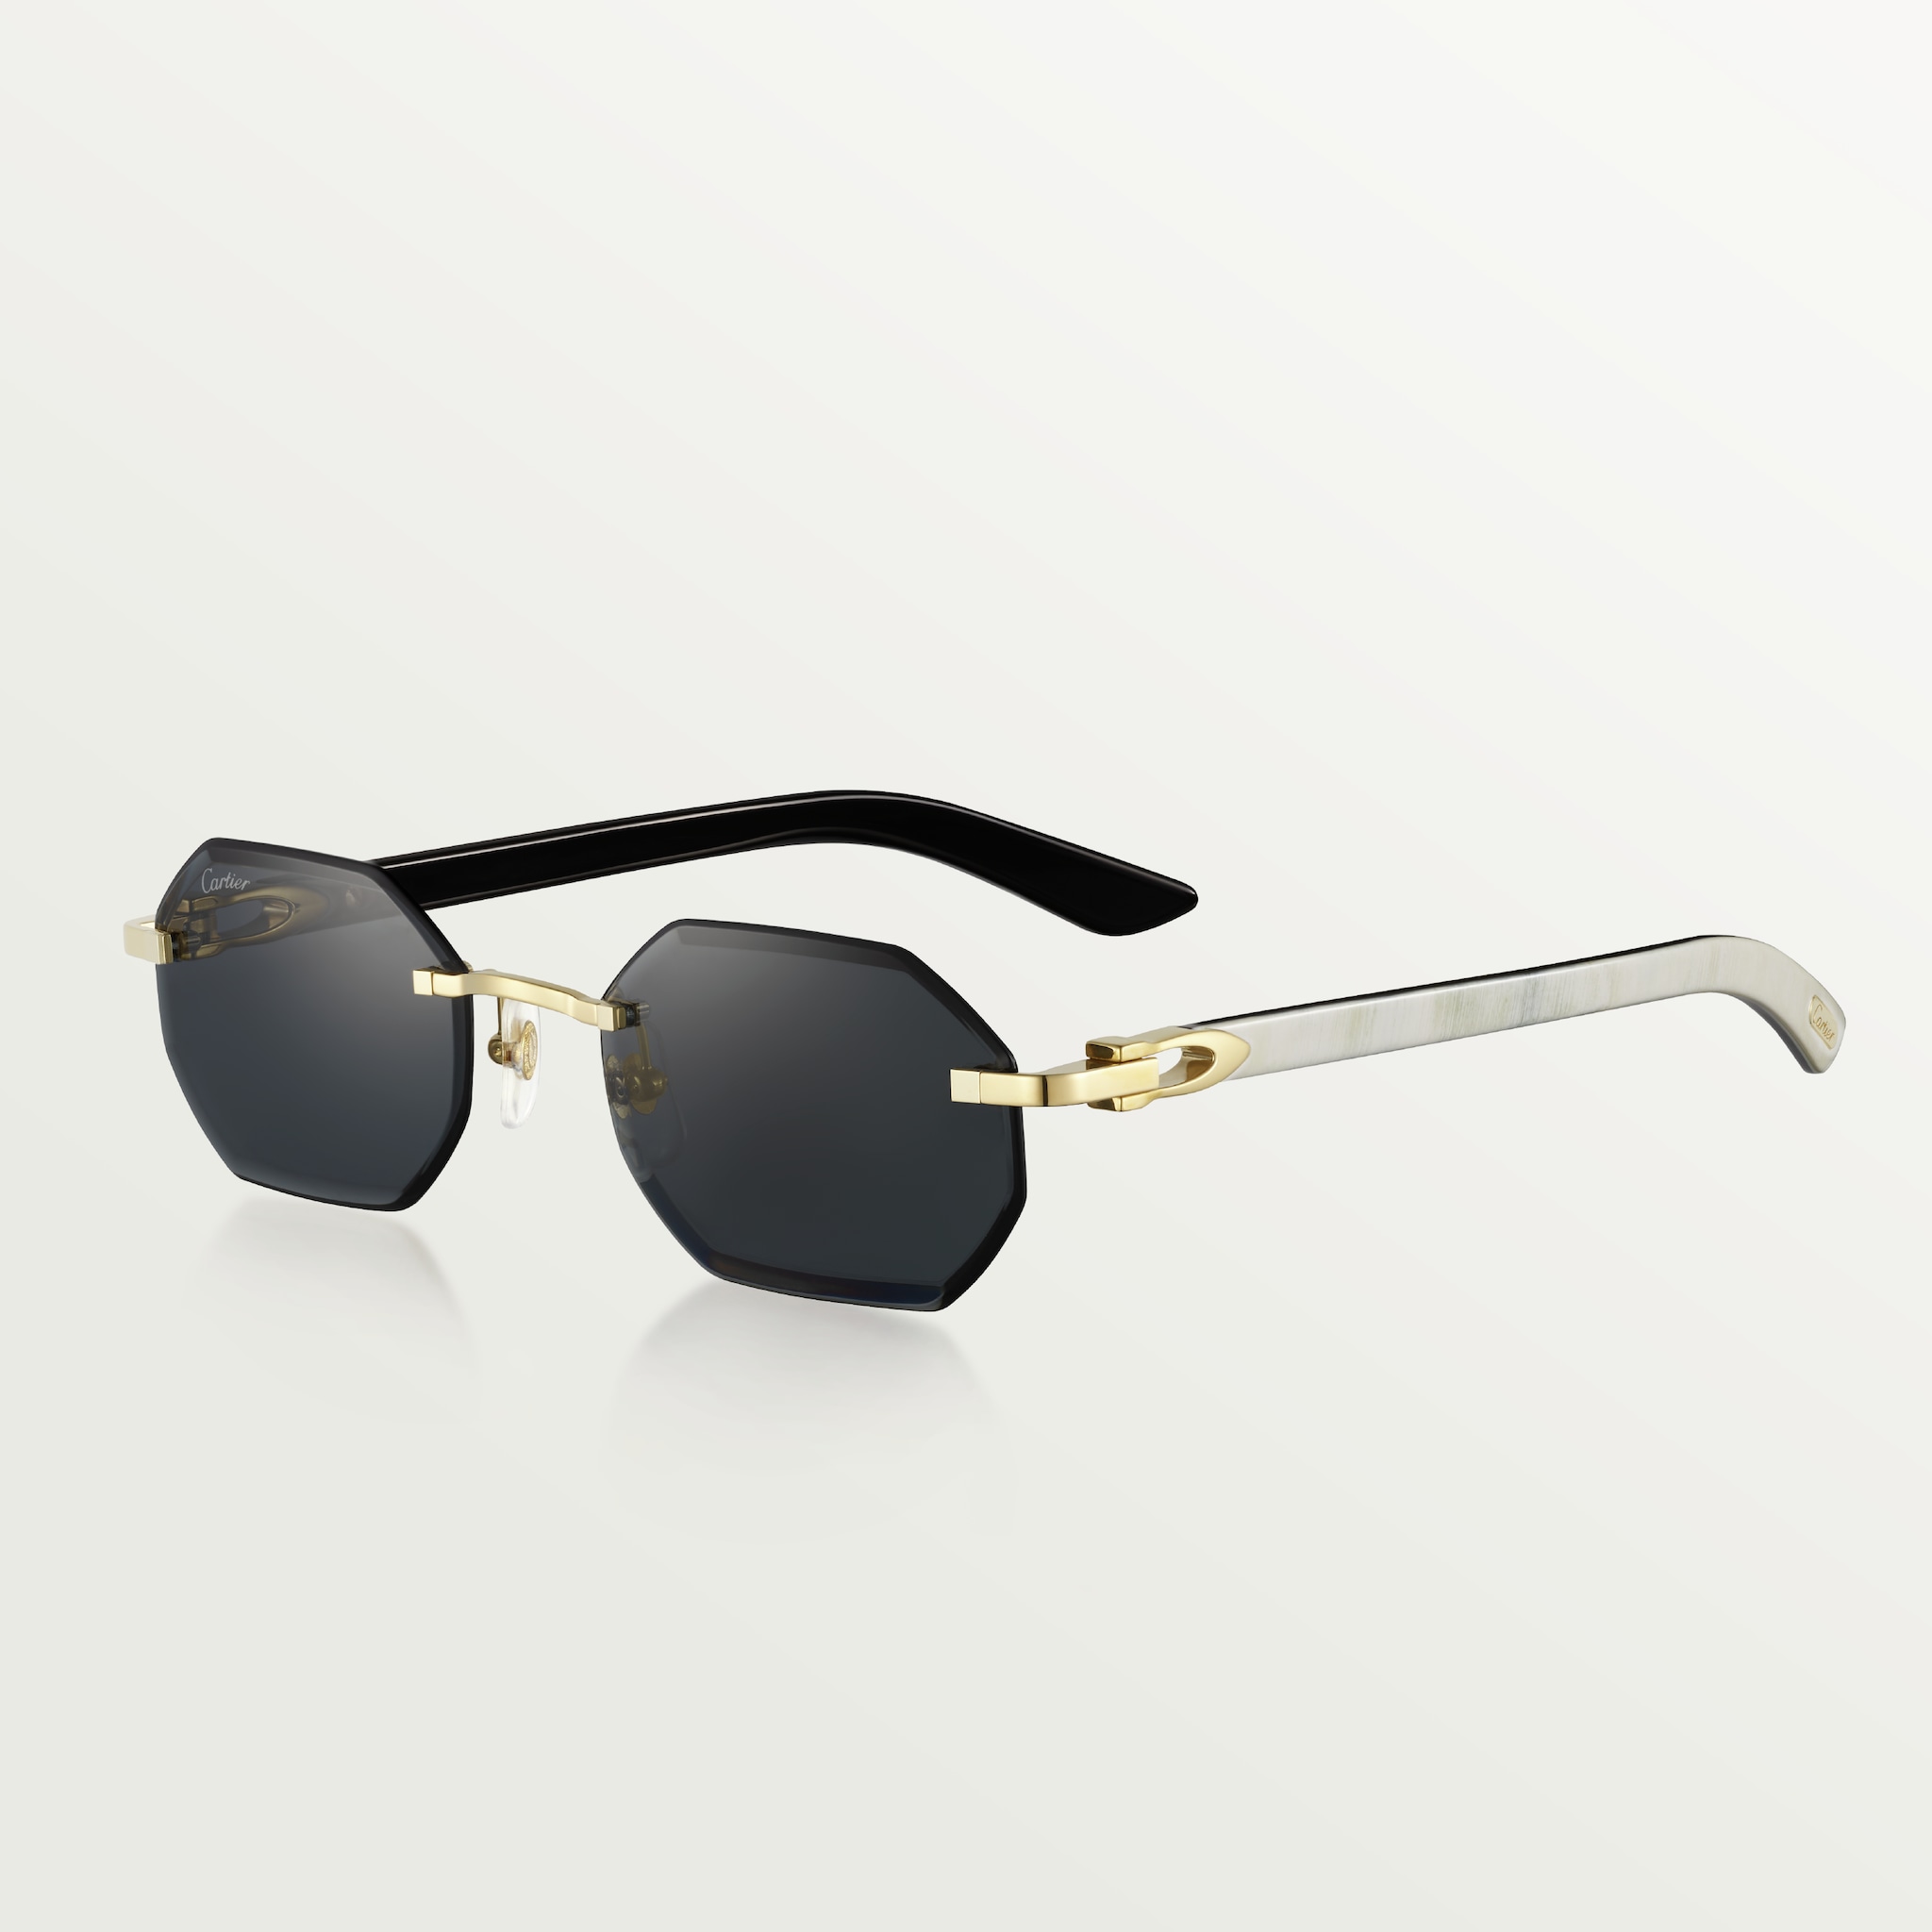 Signature C de Cartier sunglassesSmooth golden-finish metal, grey lenses